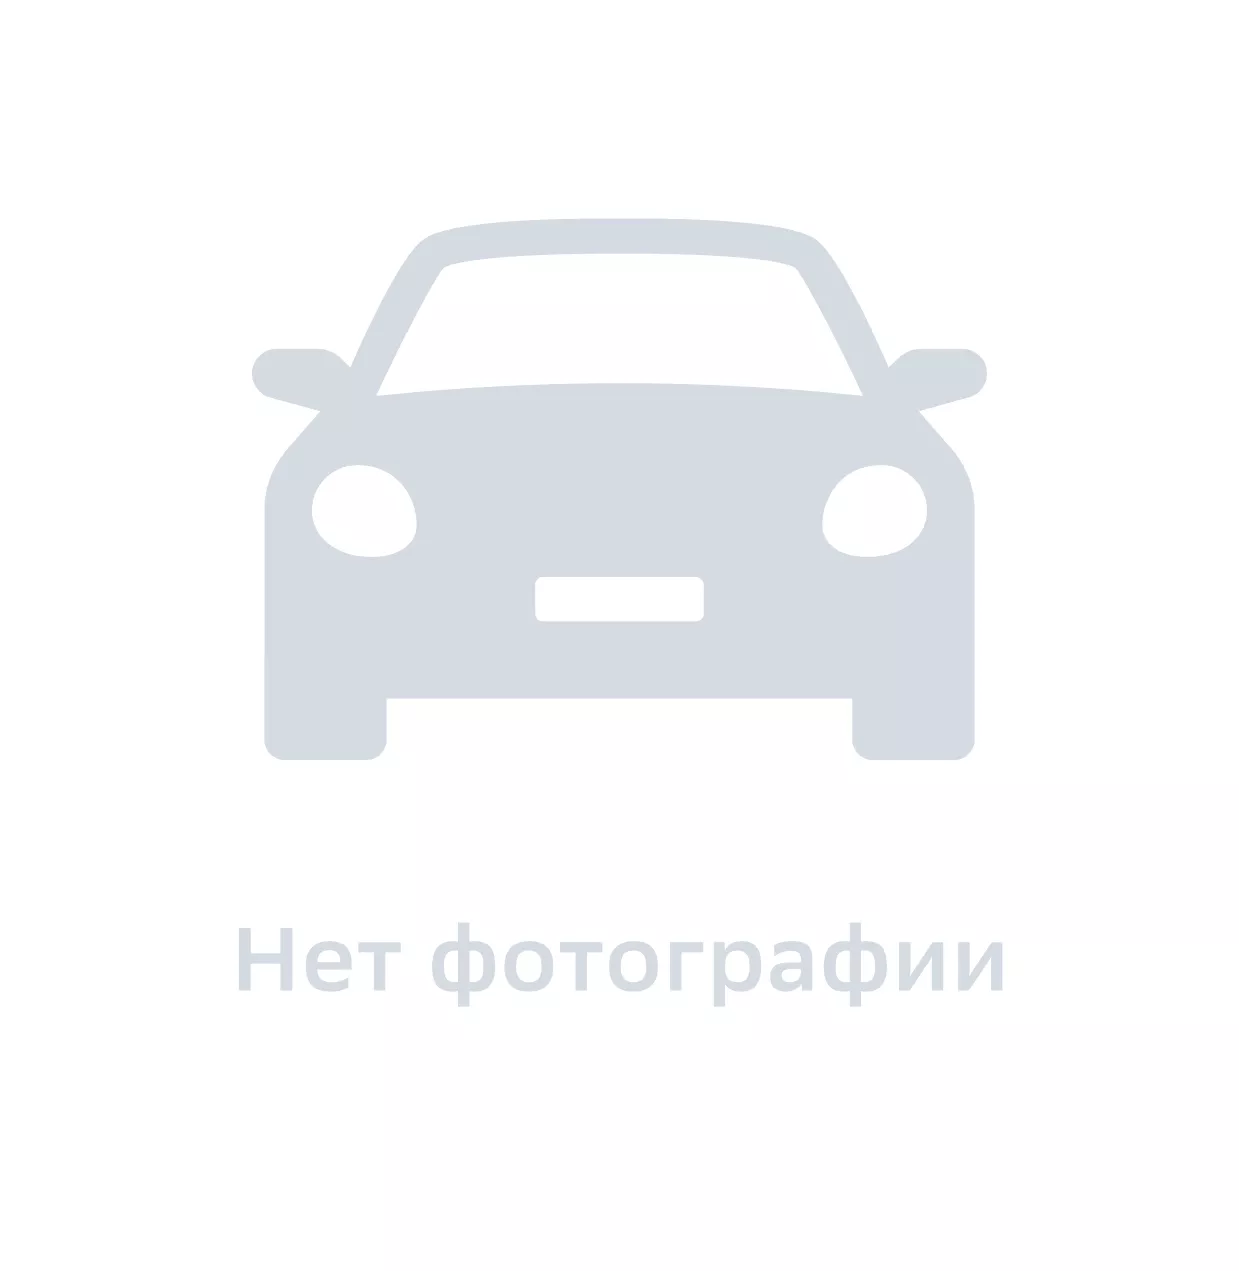 Панель заднего фонаря левая, Hyundai-KIA, арт. 71575FD000, цена за 1 шт.